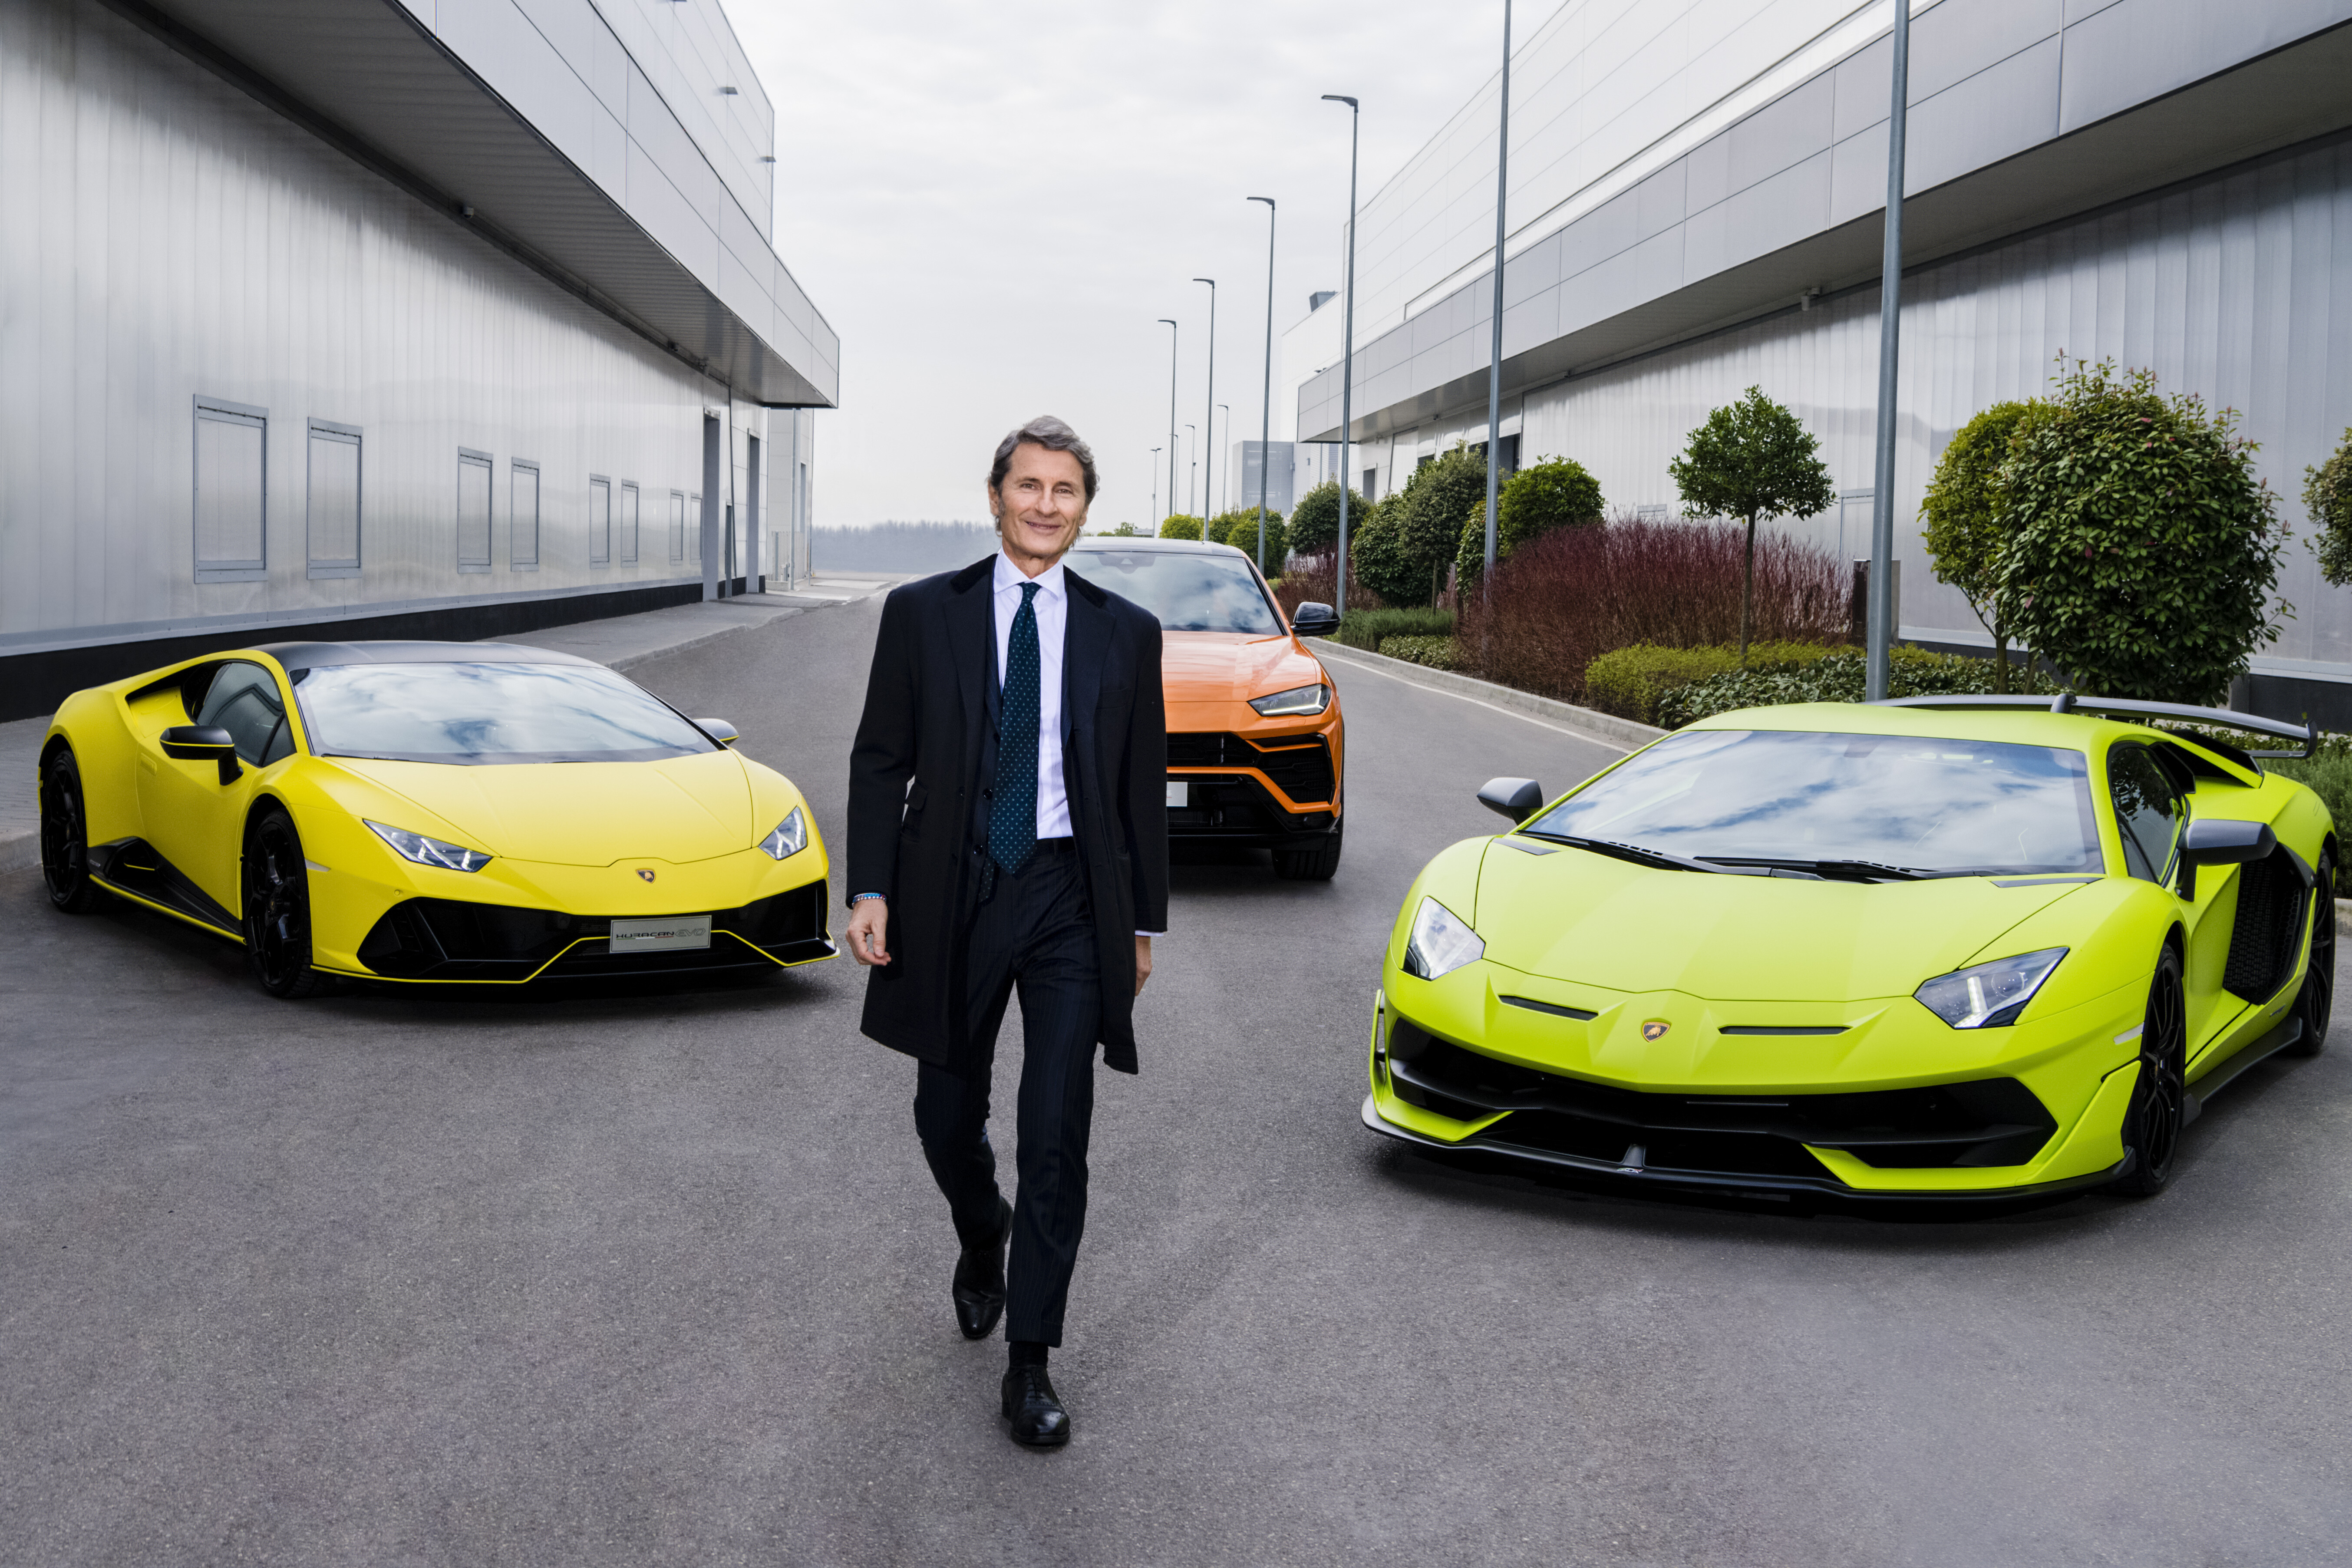 Lamborghini Huracan Reviews, price and on variations